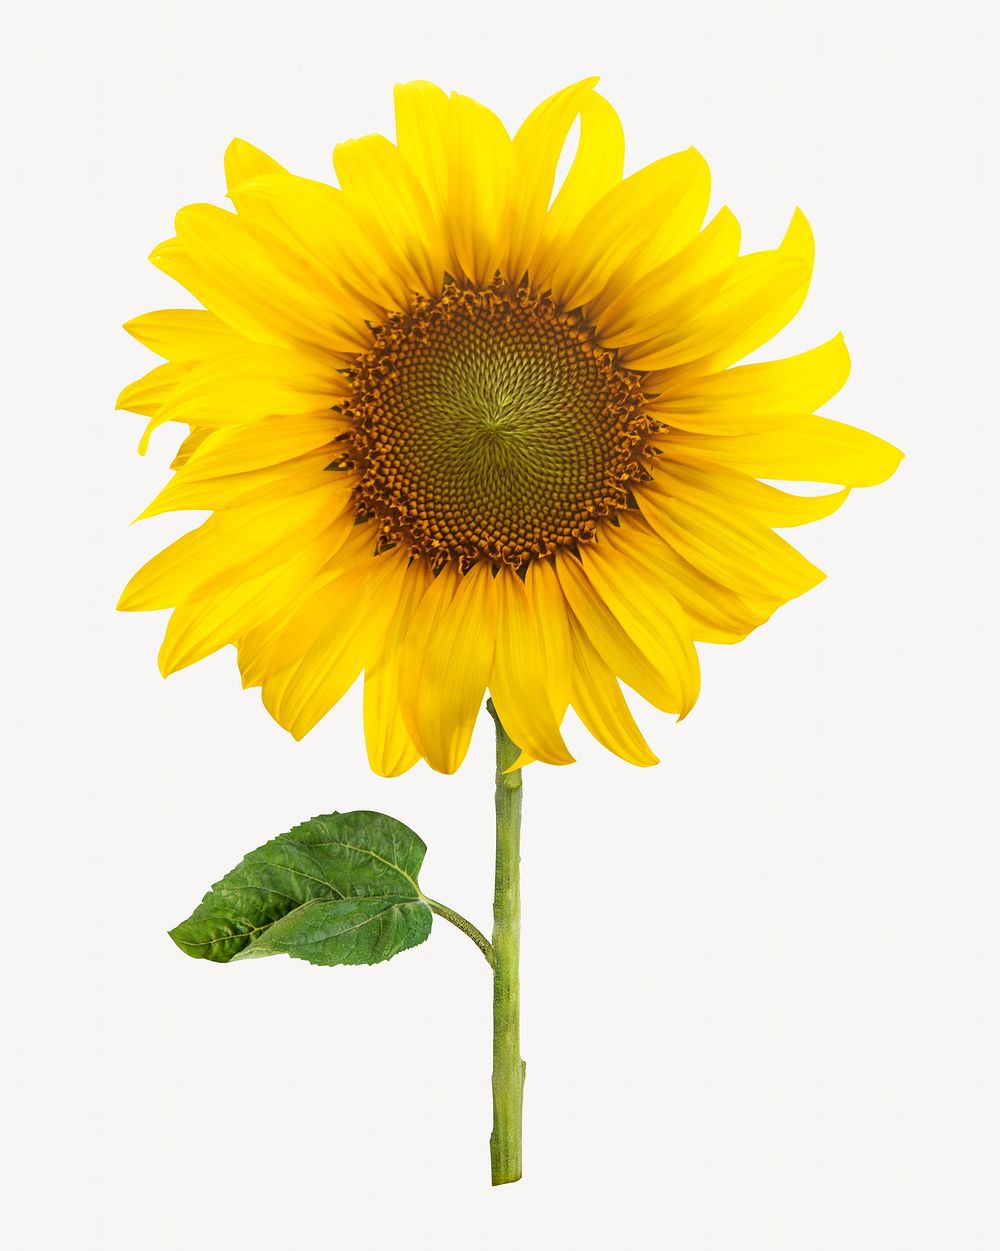 Sunflower beautiful image